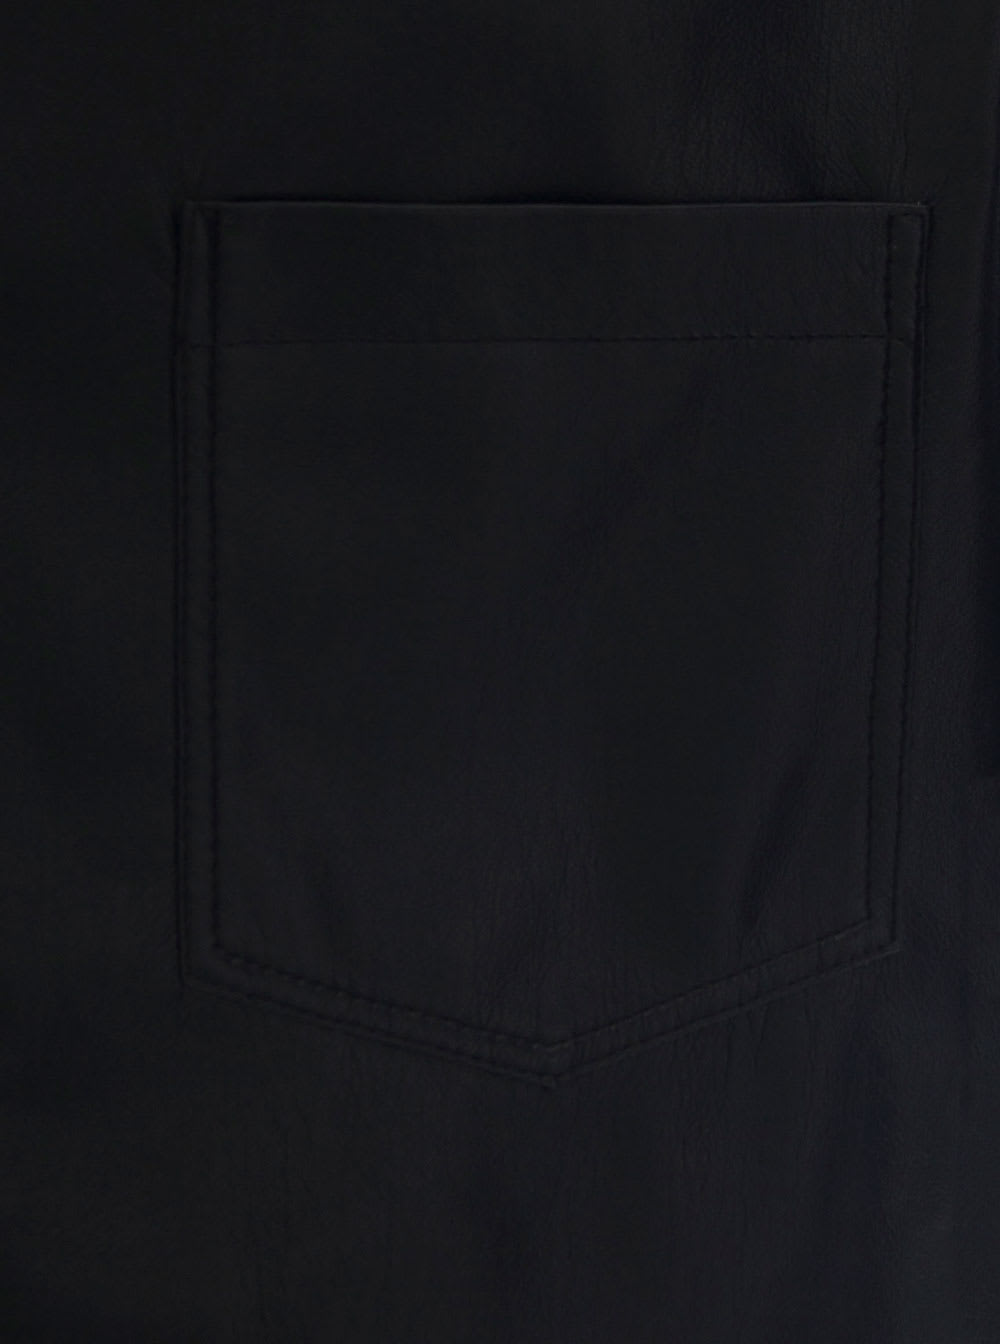 Shop Nanushka Bodil Black Short Sleeve Shirt In Faux Leather Man